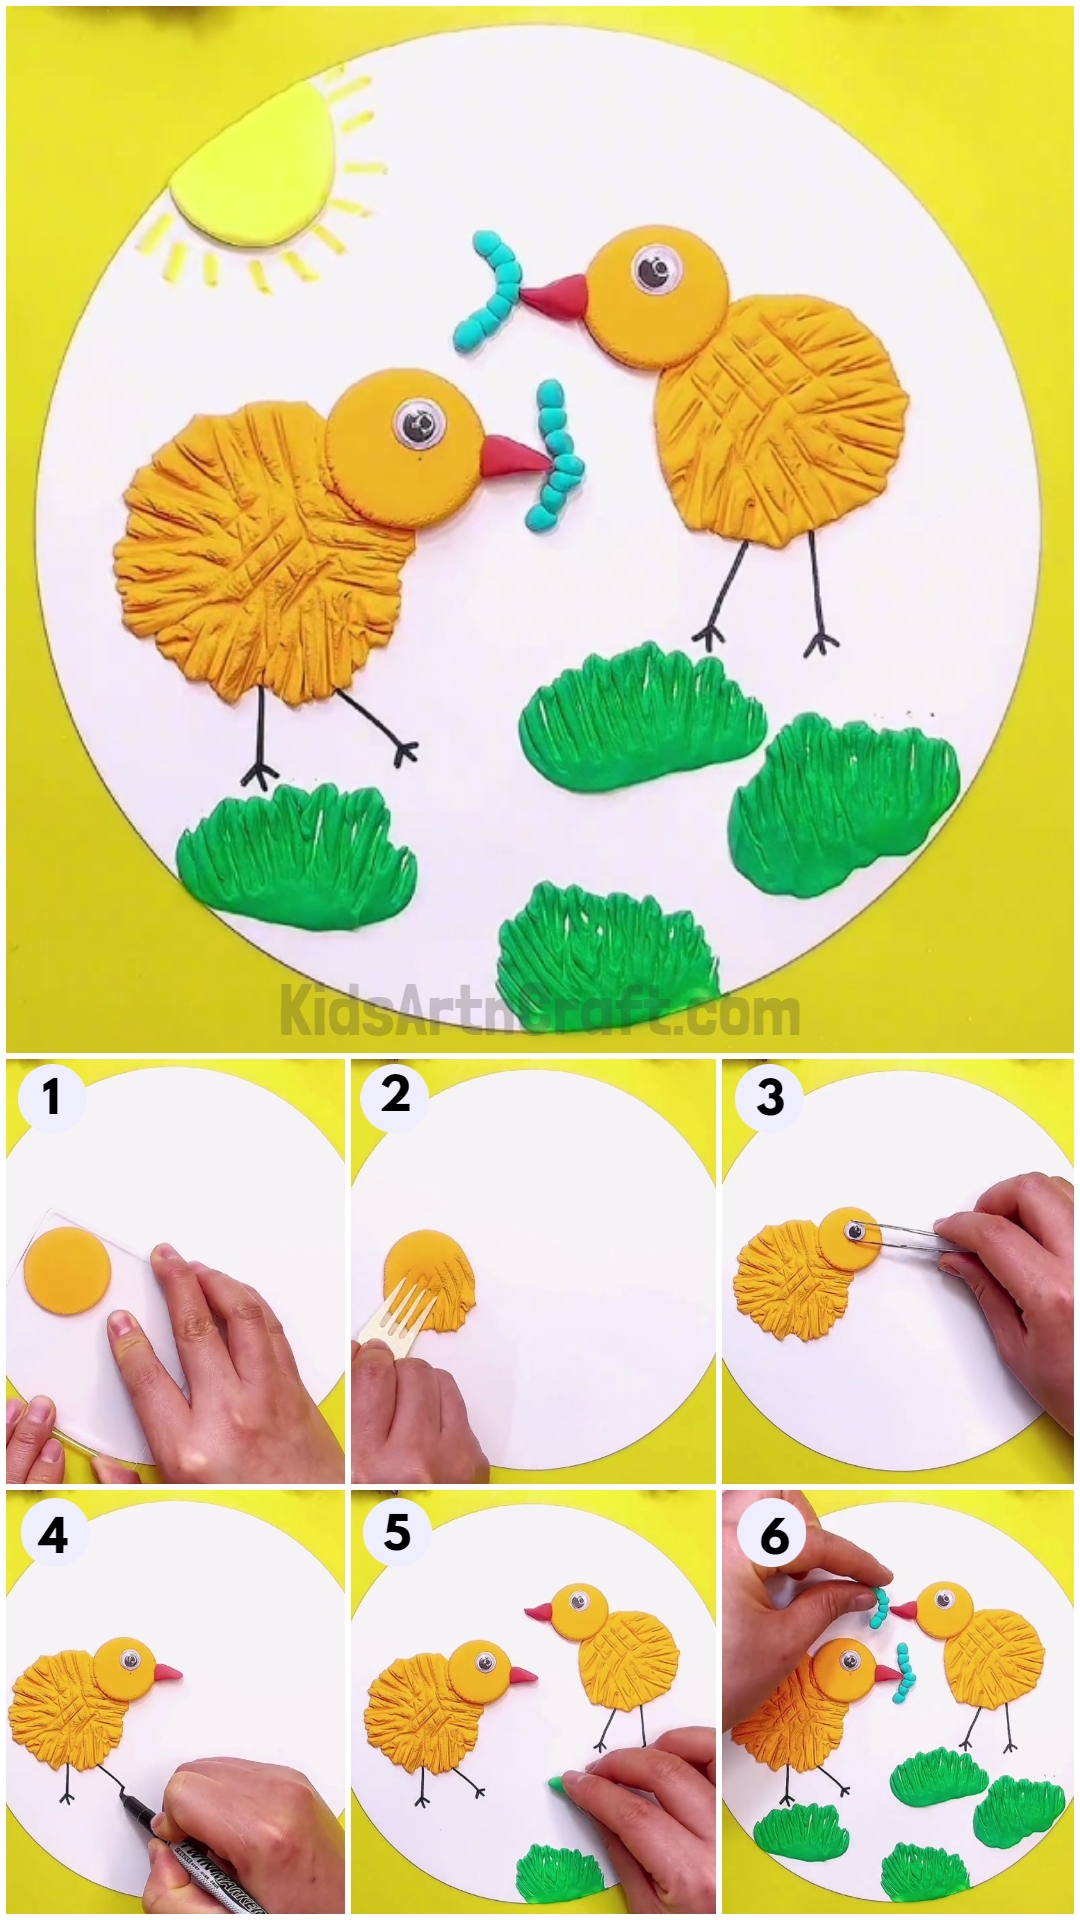 Clay Chicks Craft Artwork Step-by-step Tutorial